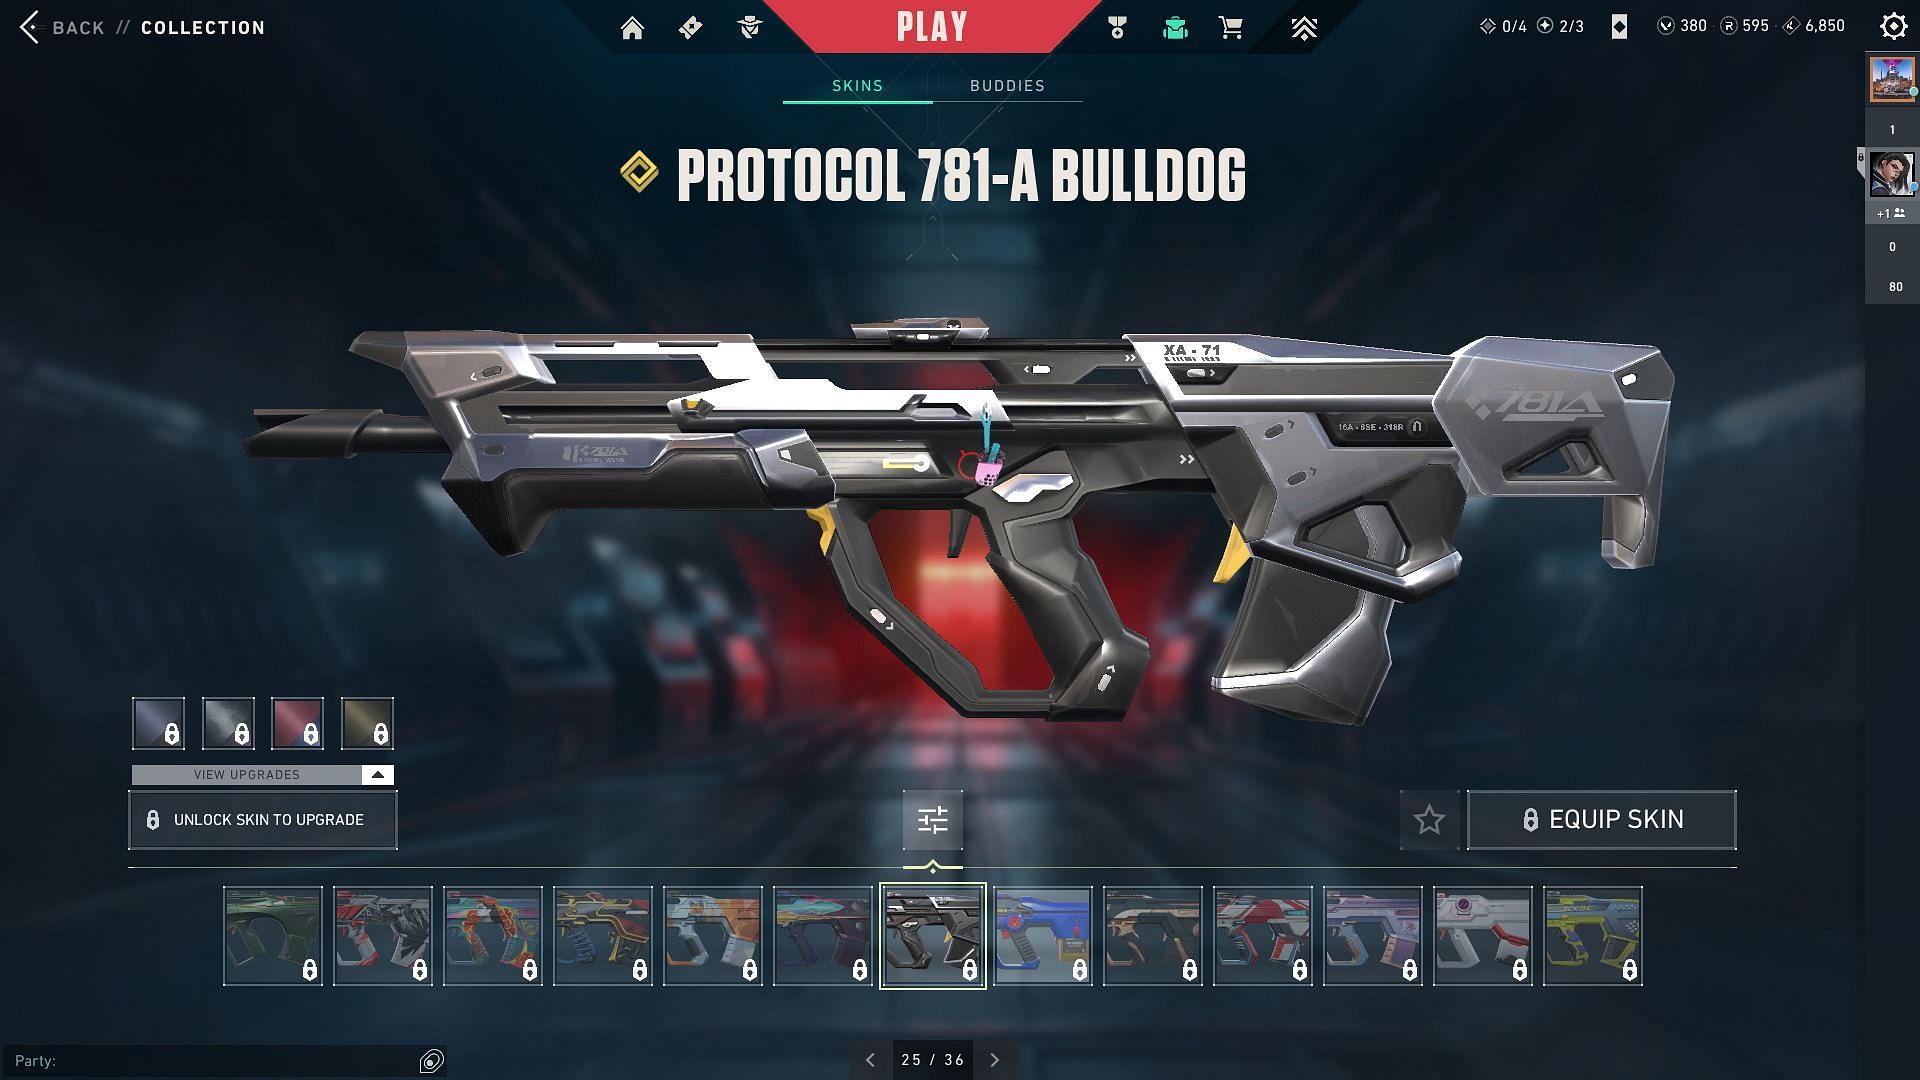 Protocol 781-A Bulldog (Image via Riot Games)